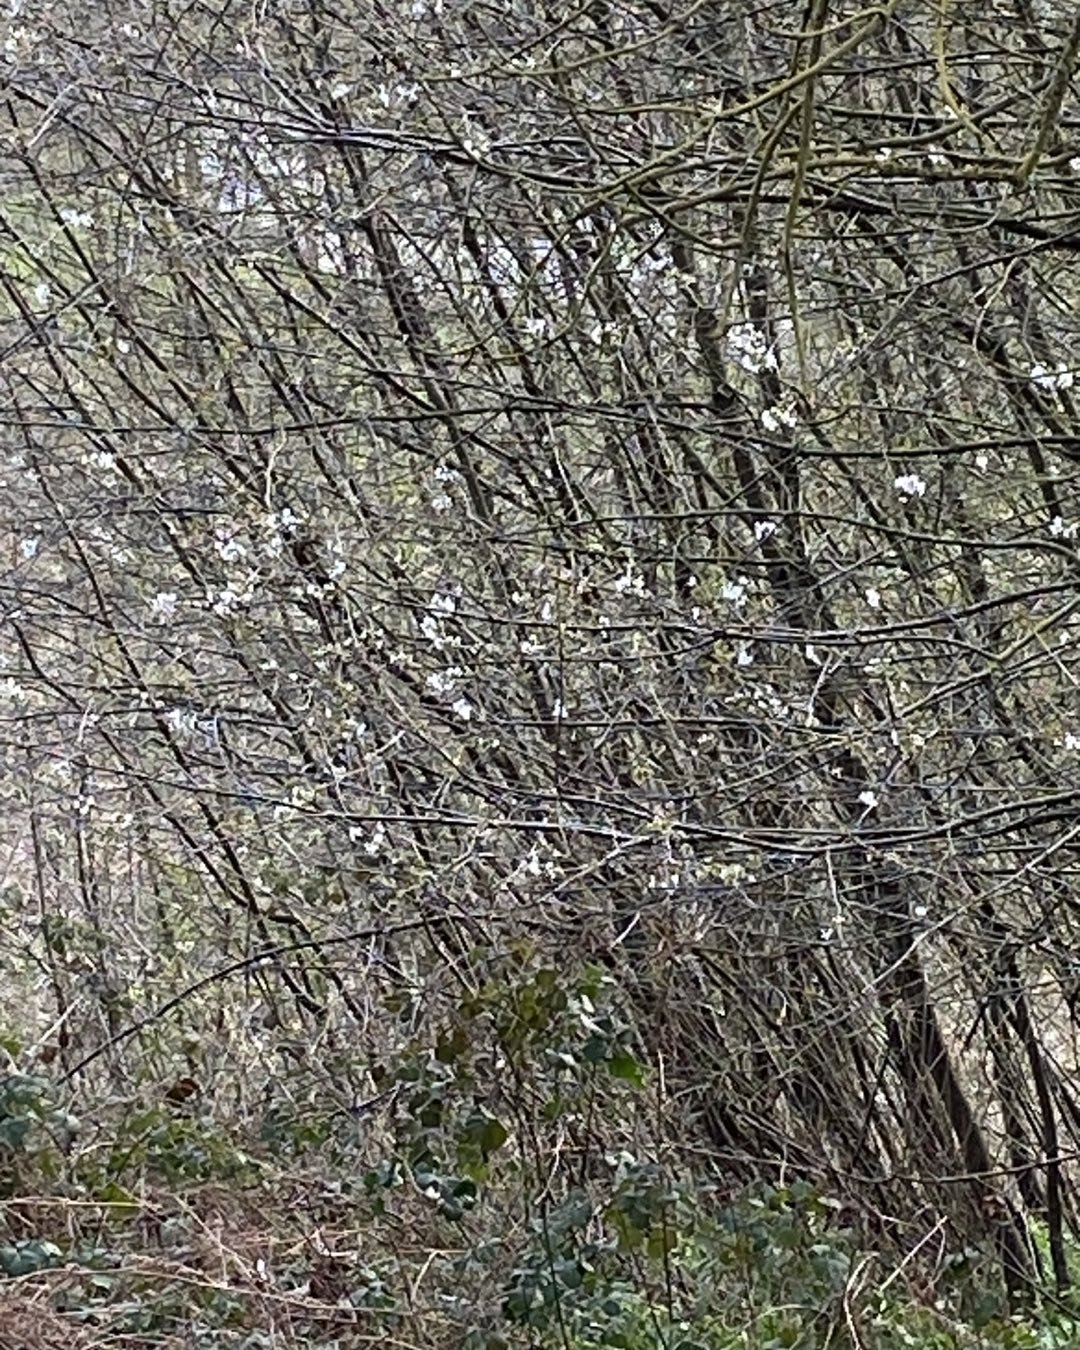 The woods today&hellip;

#blossom #woods #wildblossom #springtrees🌳 #natureloversgallery #northyorkshire #landscapelovers #lesleyseegerpaintings